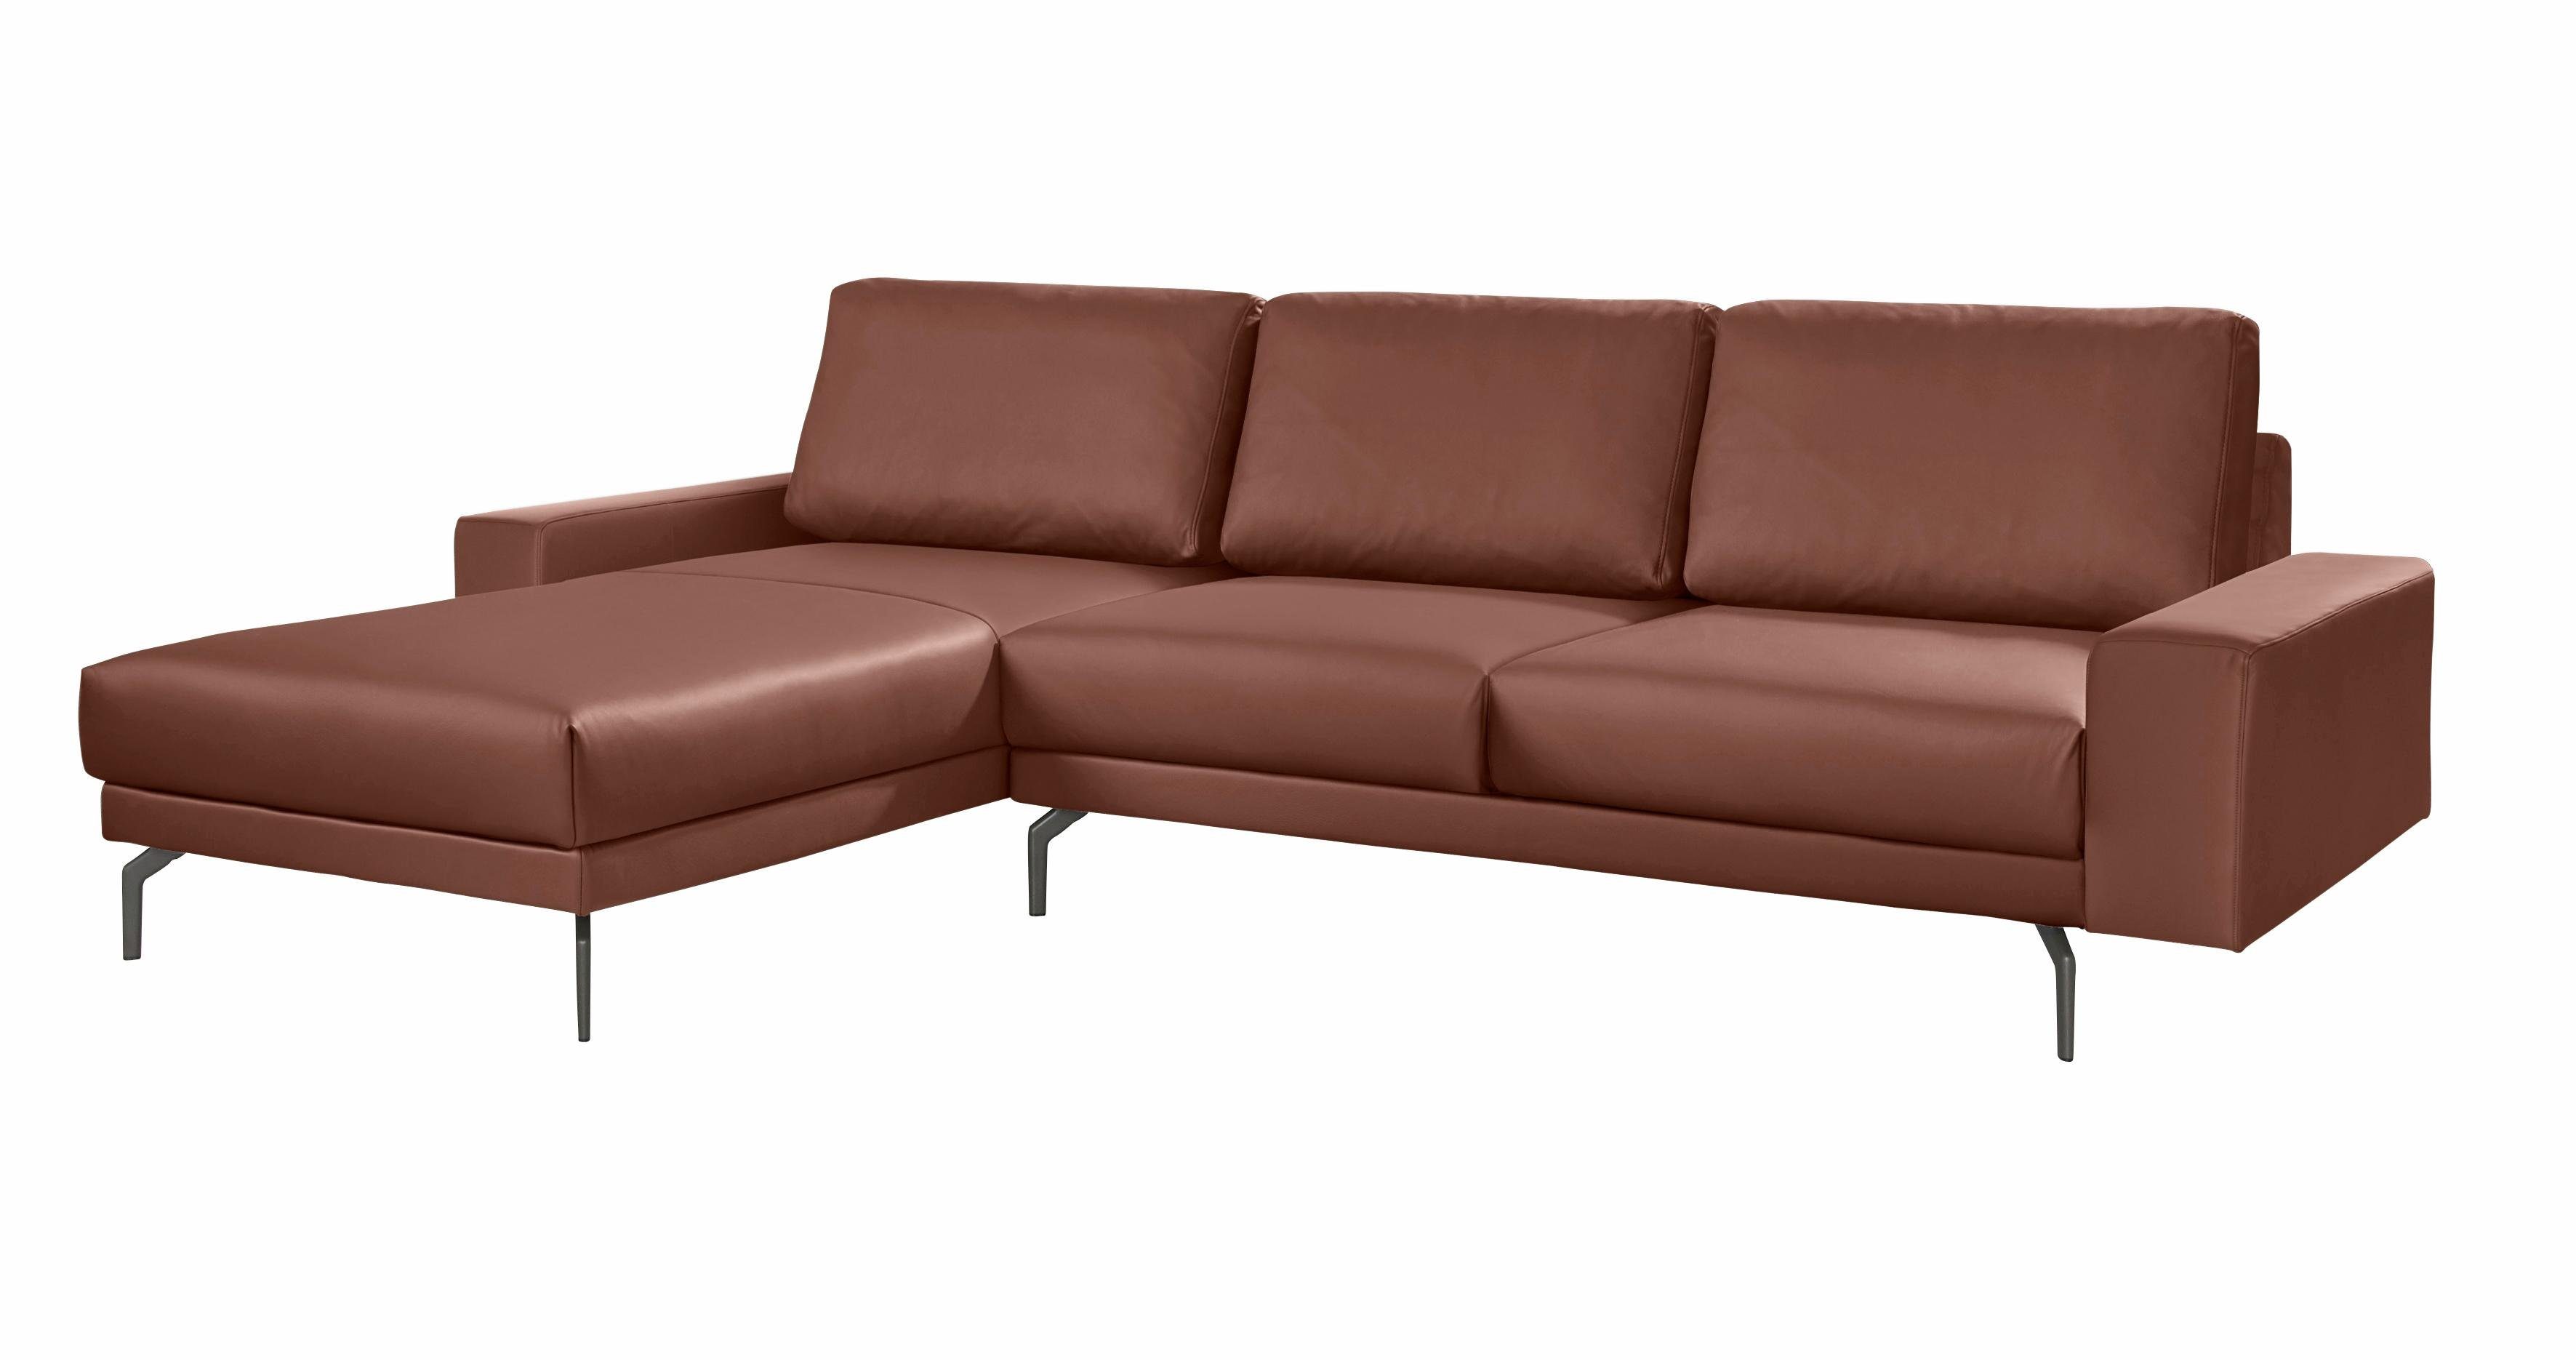 Ecksofa niedrig, umbragrau, breit in Breite hülsta Armlehne Alugussfüße und 274 cm hs.450, sofa